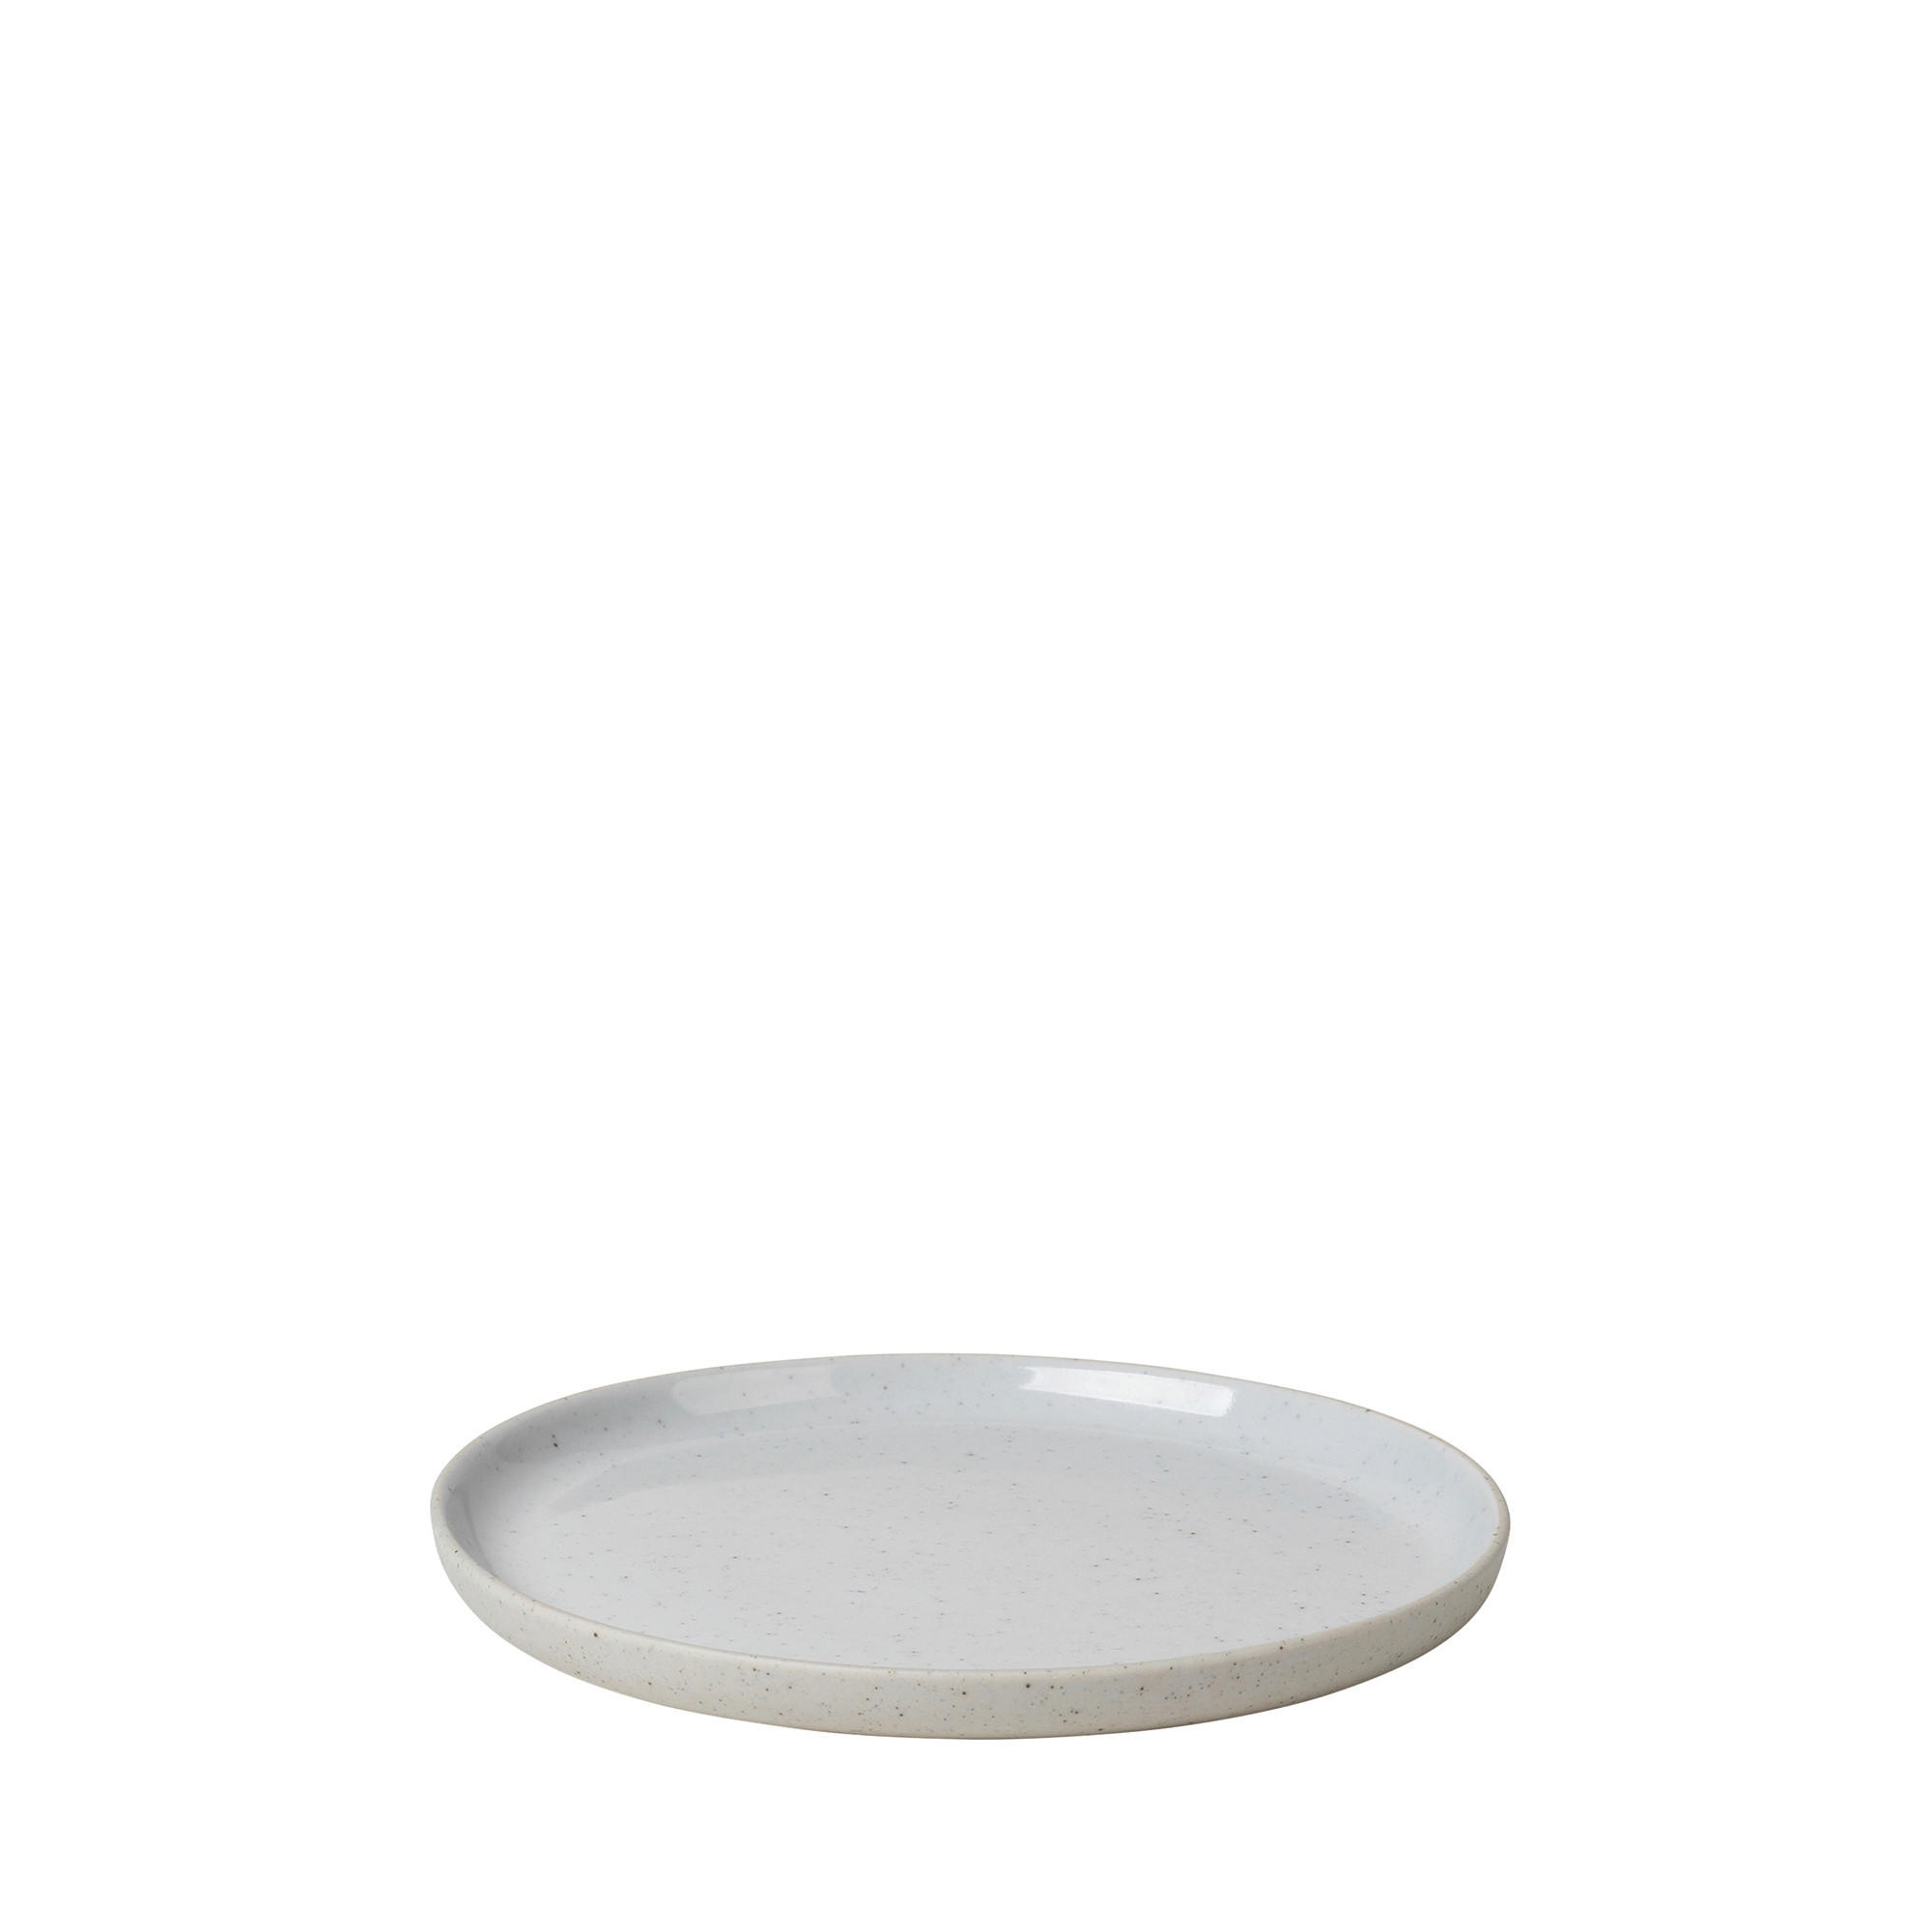 SALATTELLER Sablo  - Beige/Grau, Design, Keramik (14/1,6cm) - Blomus